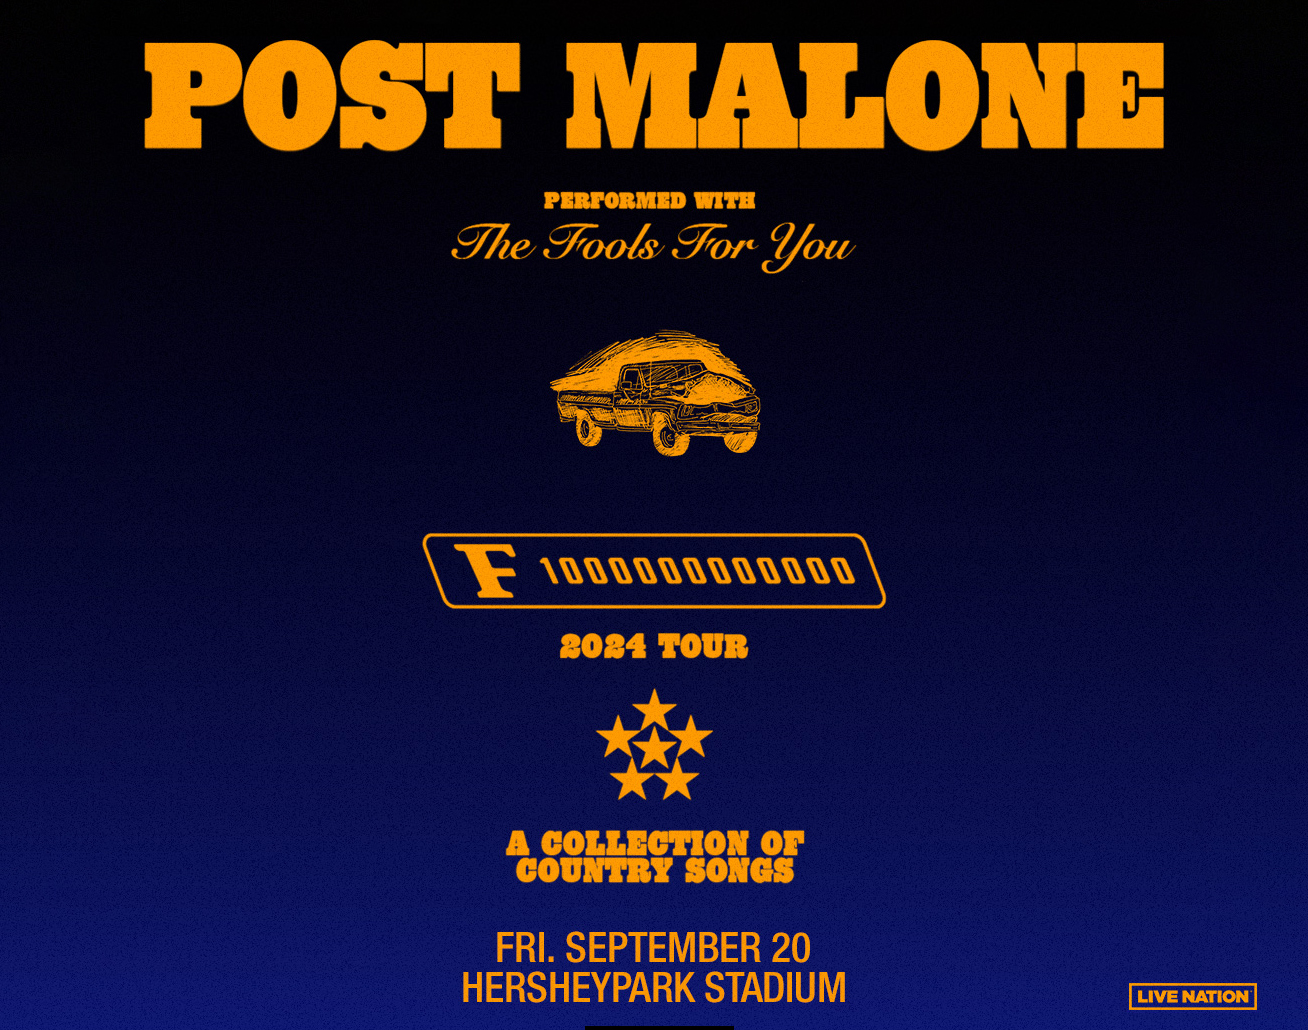 Post Malone at Hersheypark Stadium on September 20th